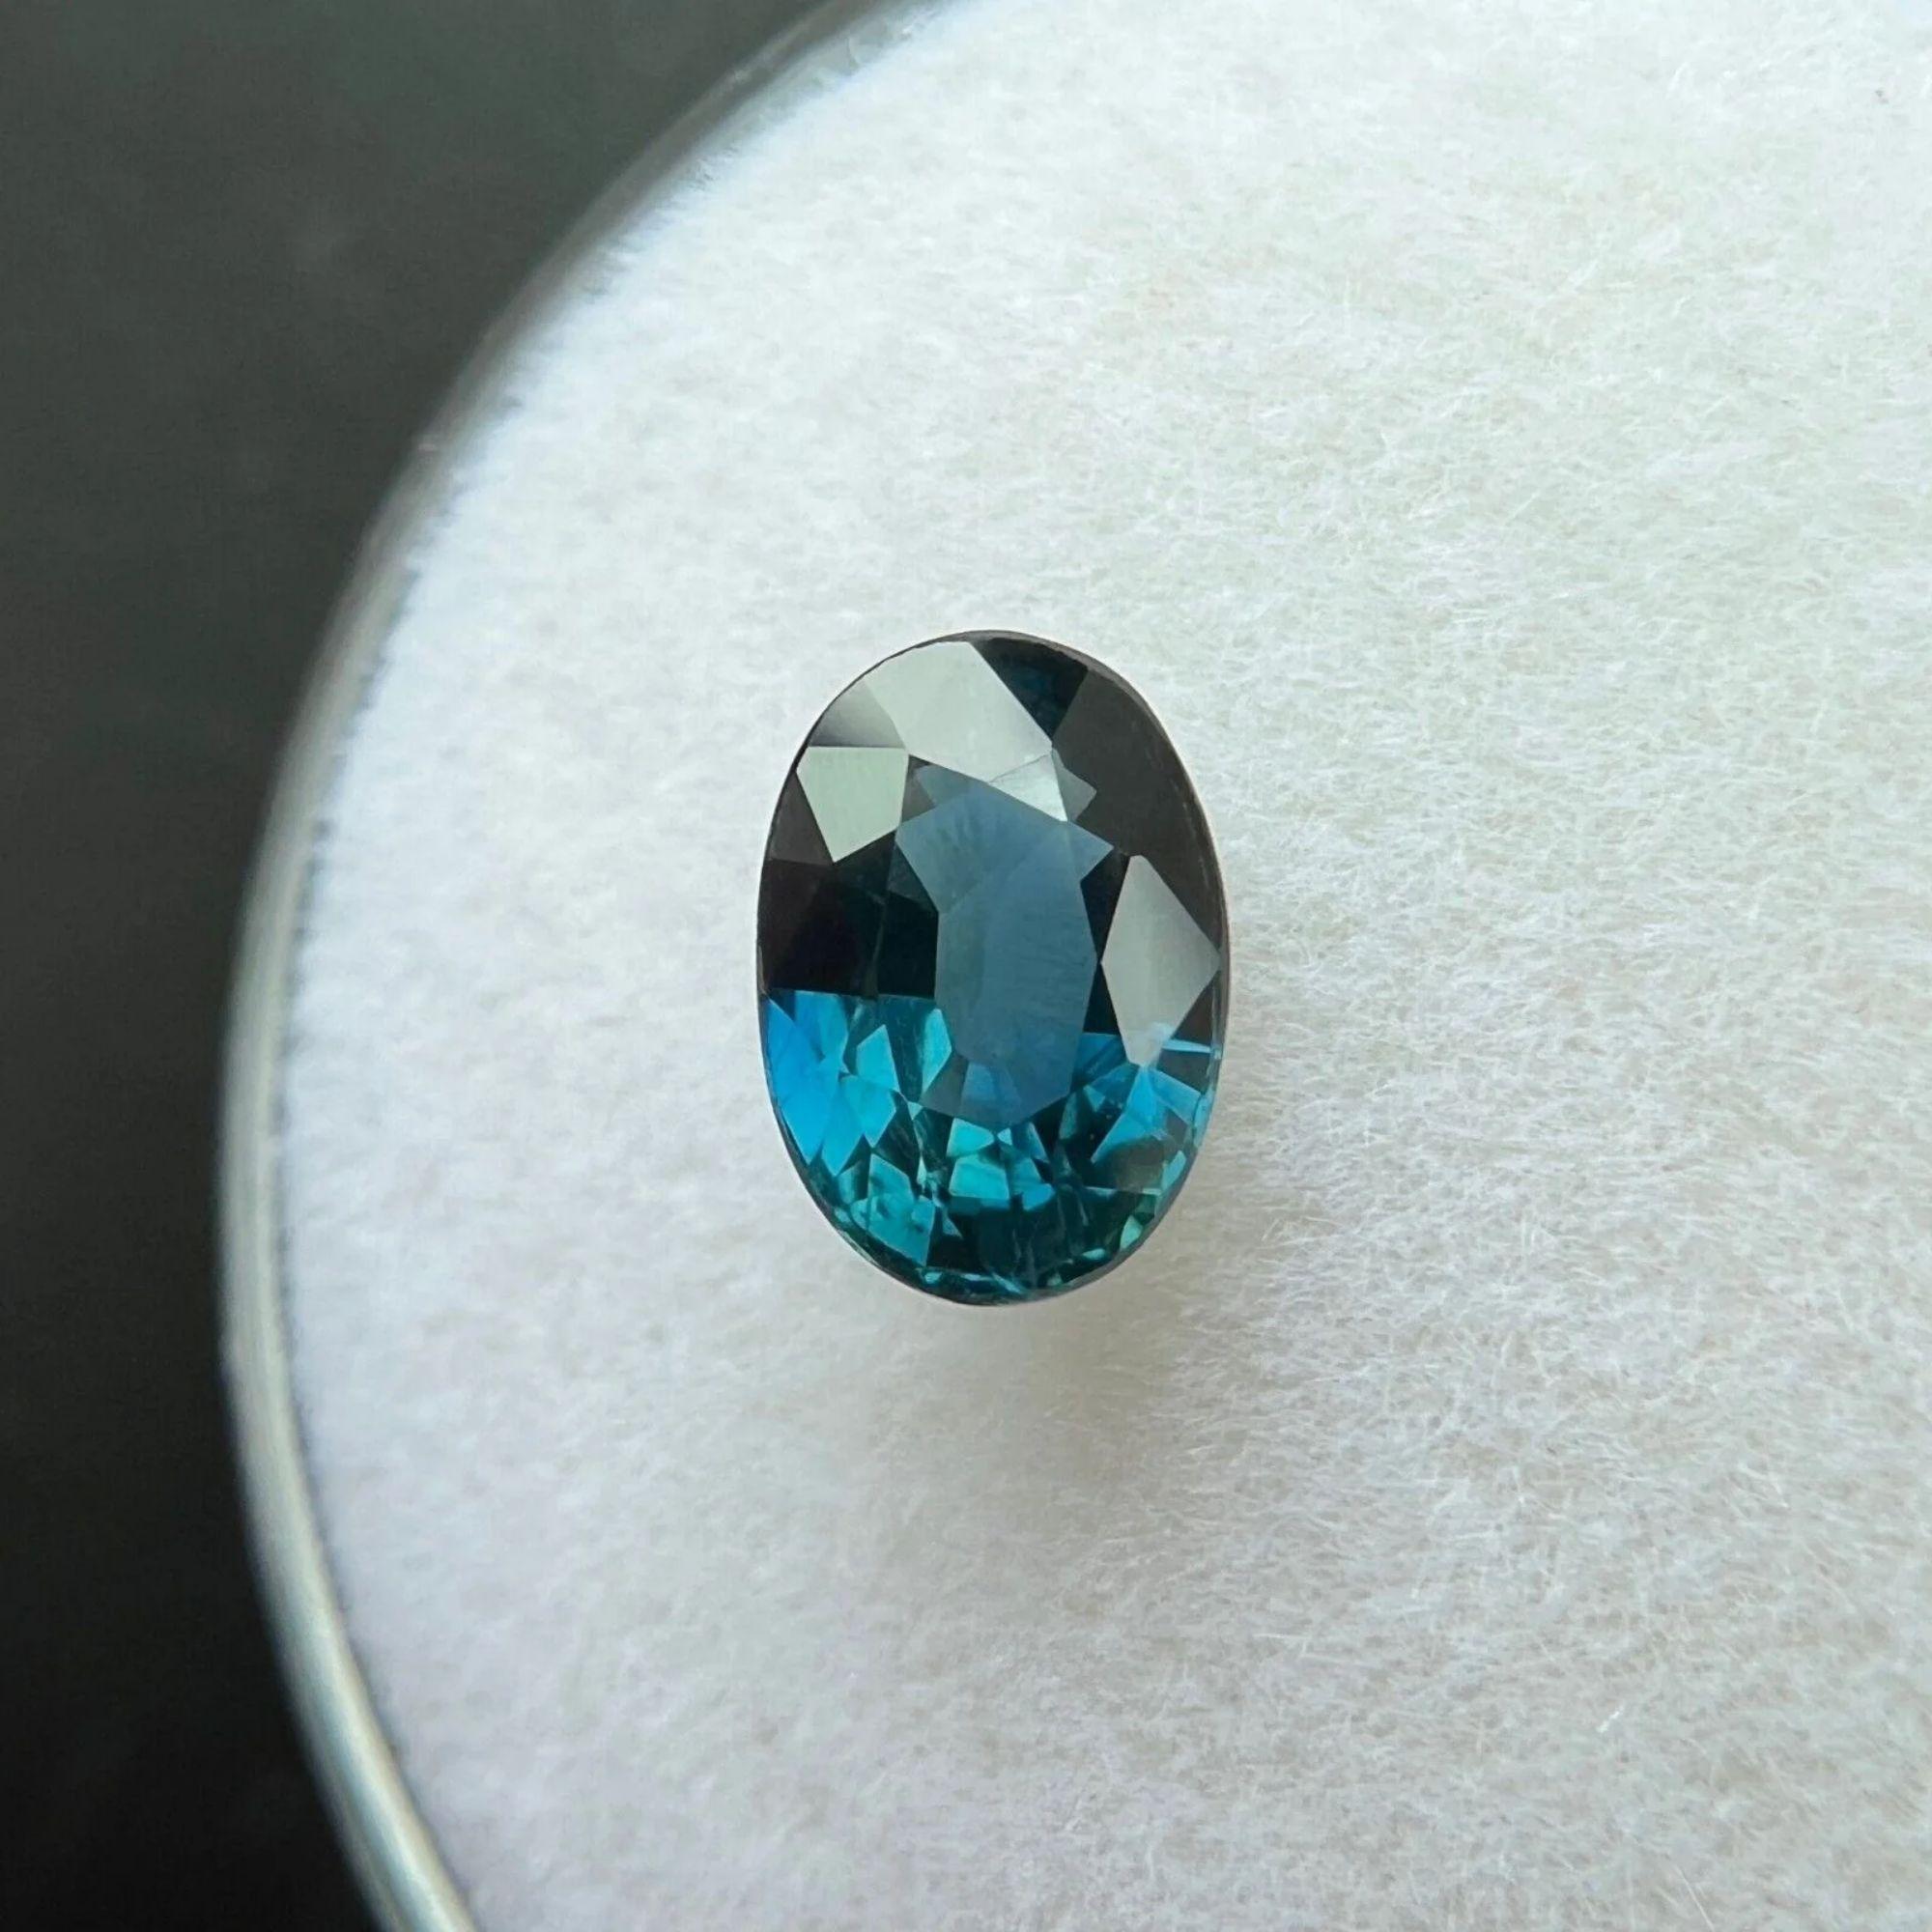 Pierre précieuse rare saphir bleu profond de taille ovale non traitée de 1,14 carat, certifiée GIA en vente 1